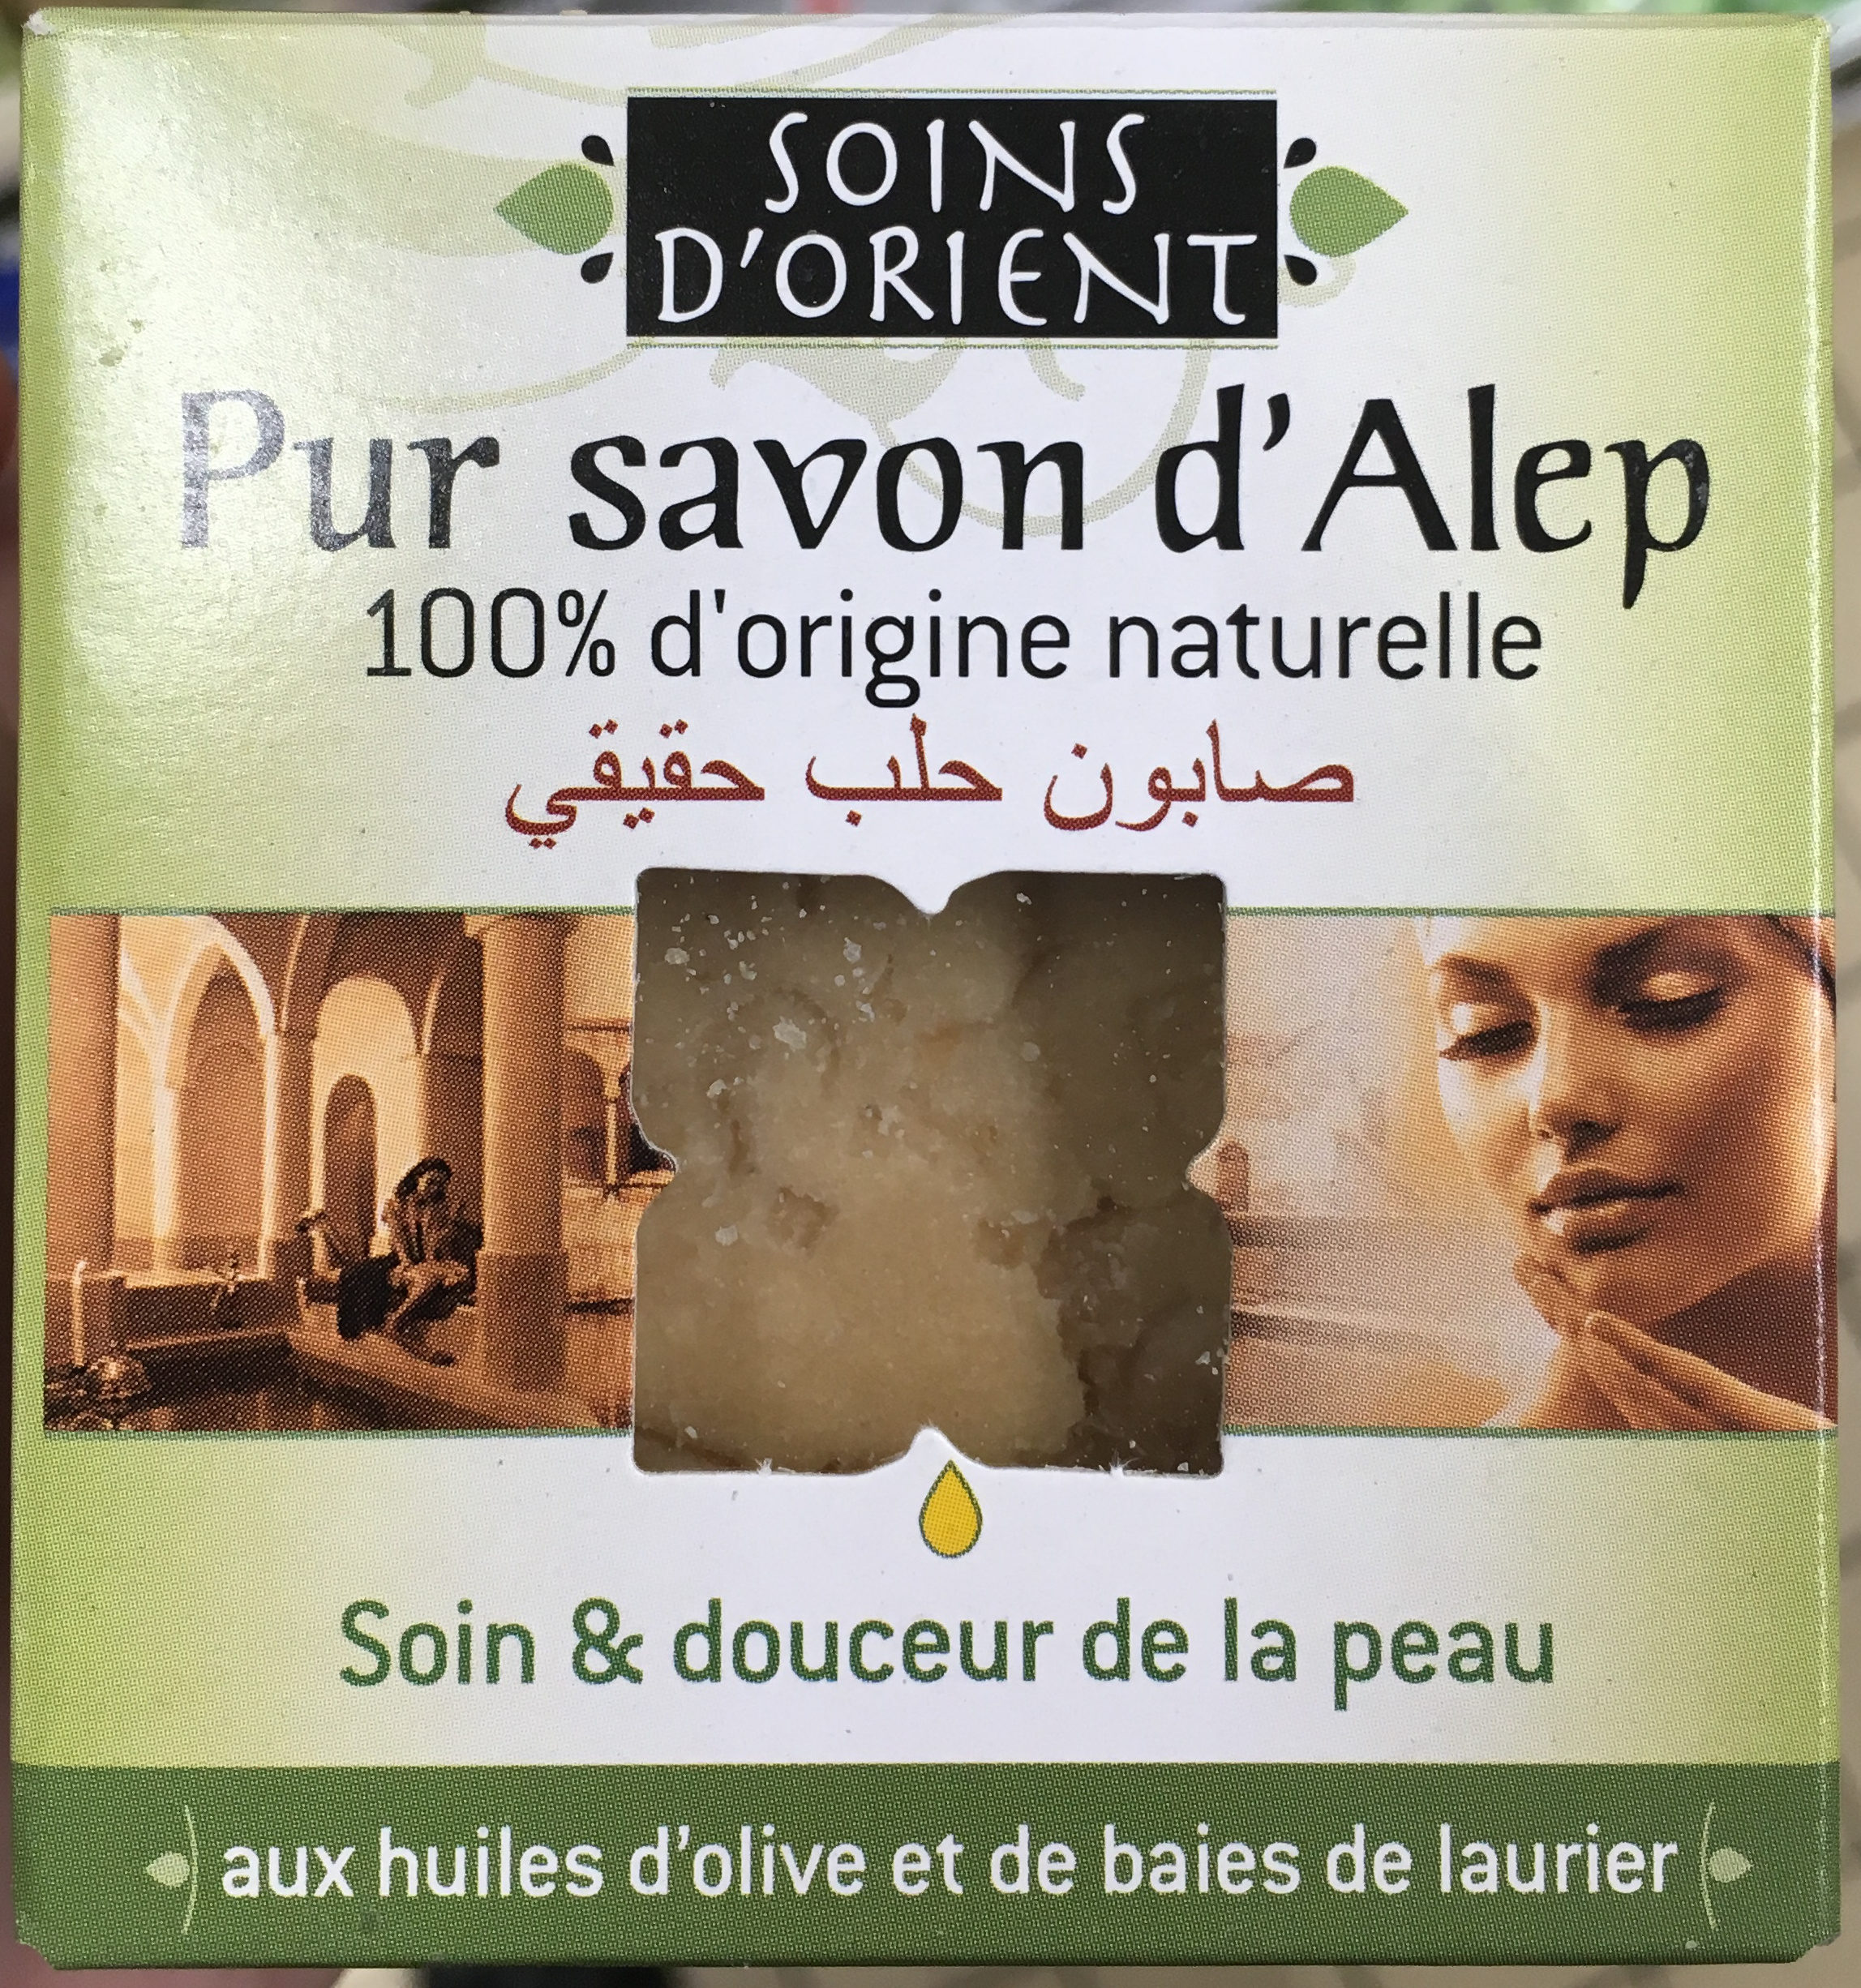 Pur savon d'Alep - Produto - fr